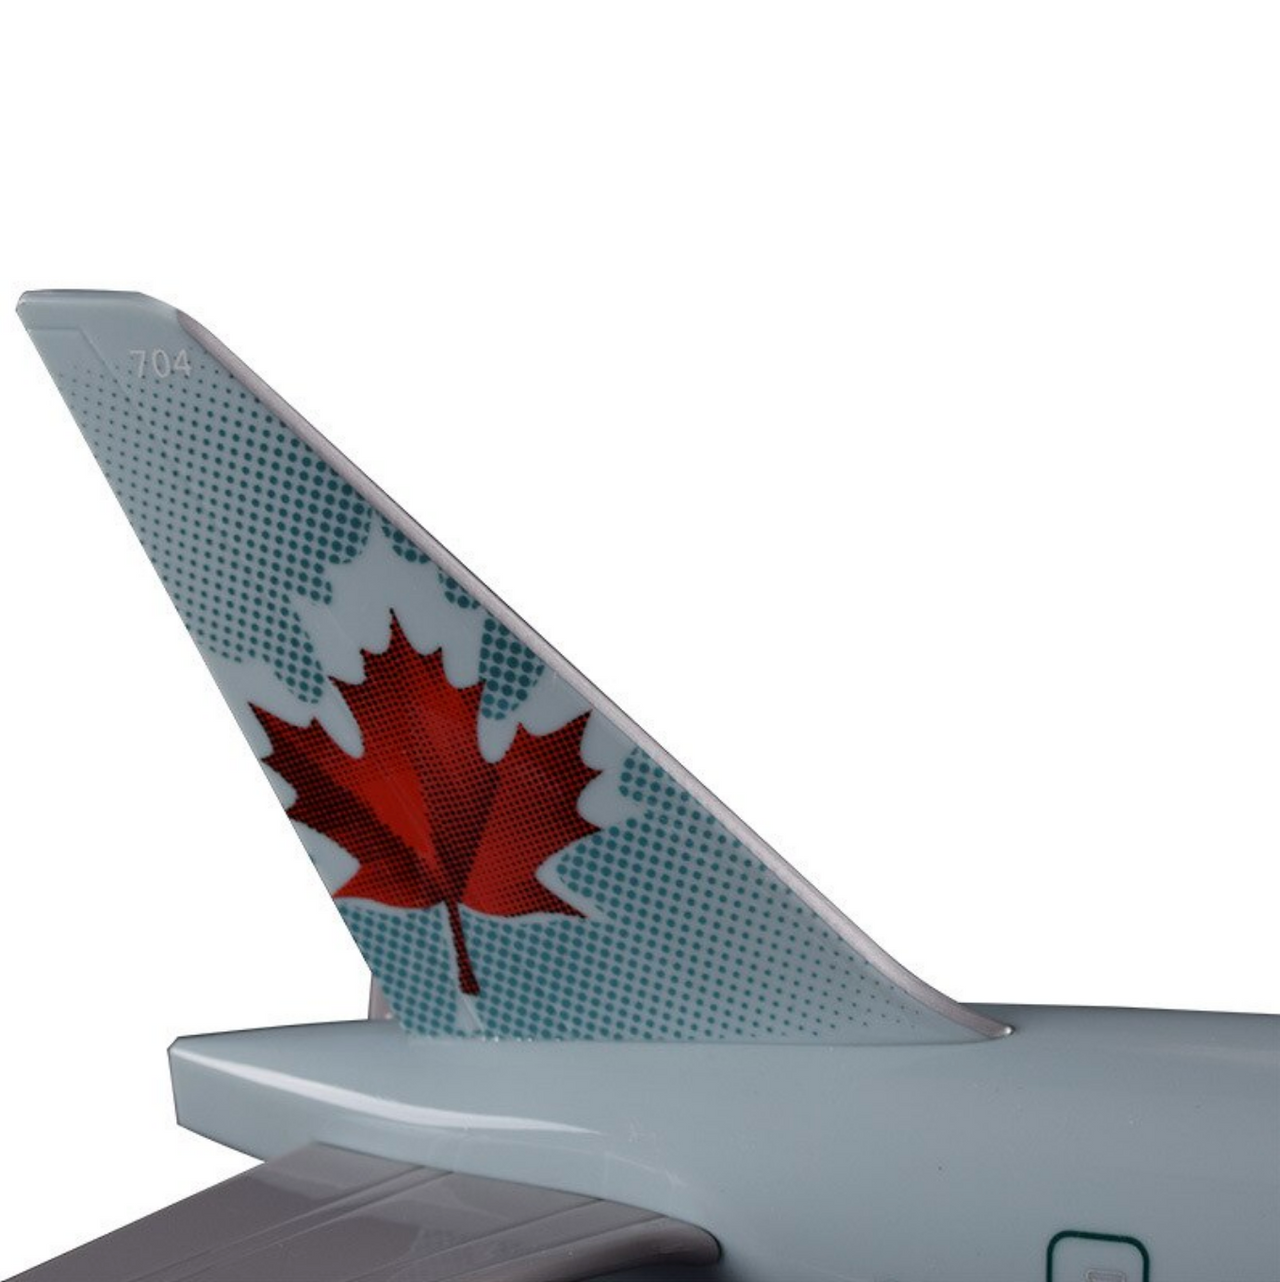 Air Canada Boeing 777 Airplane Model (Handmade 47CM)